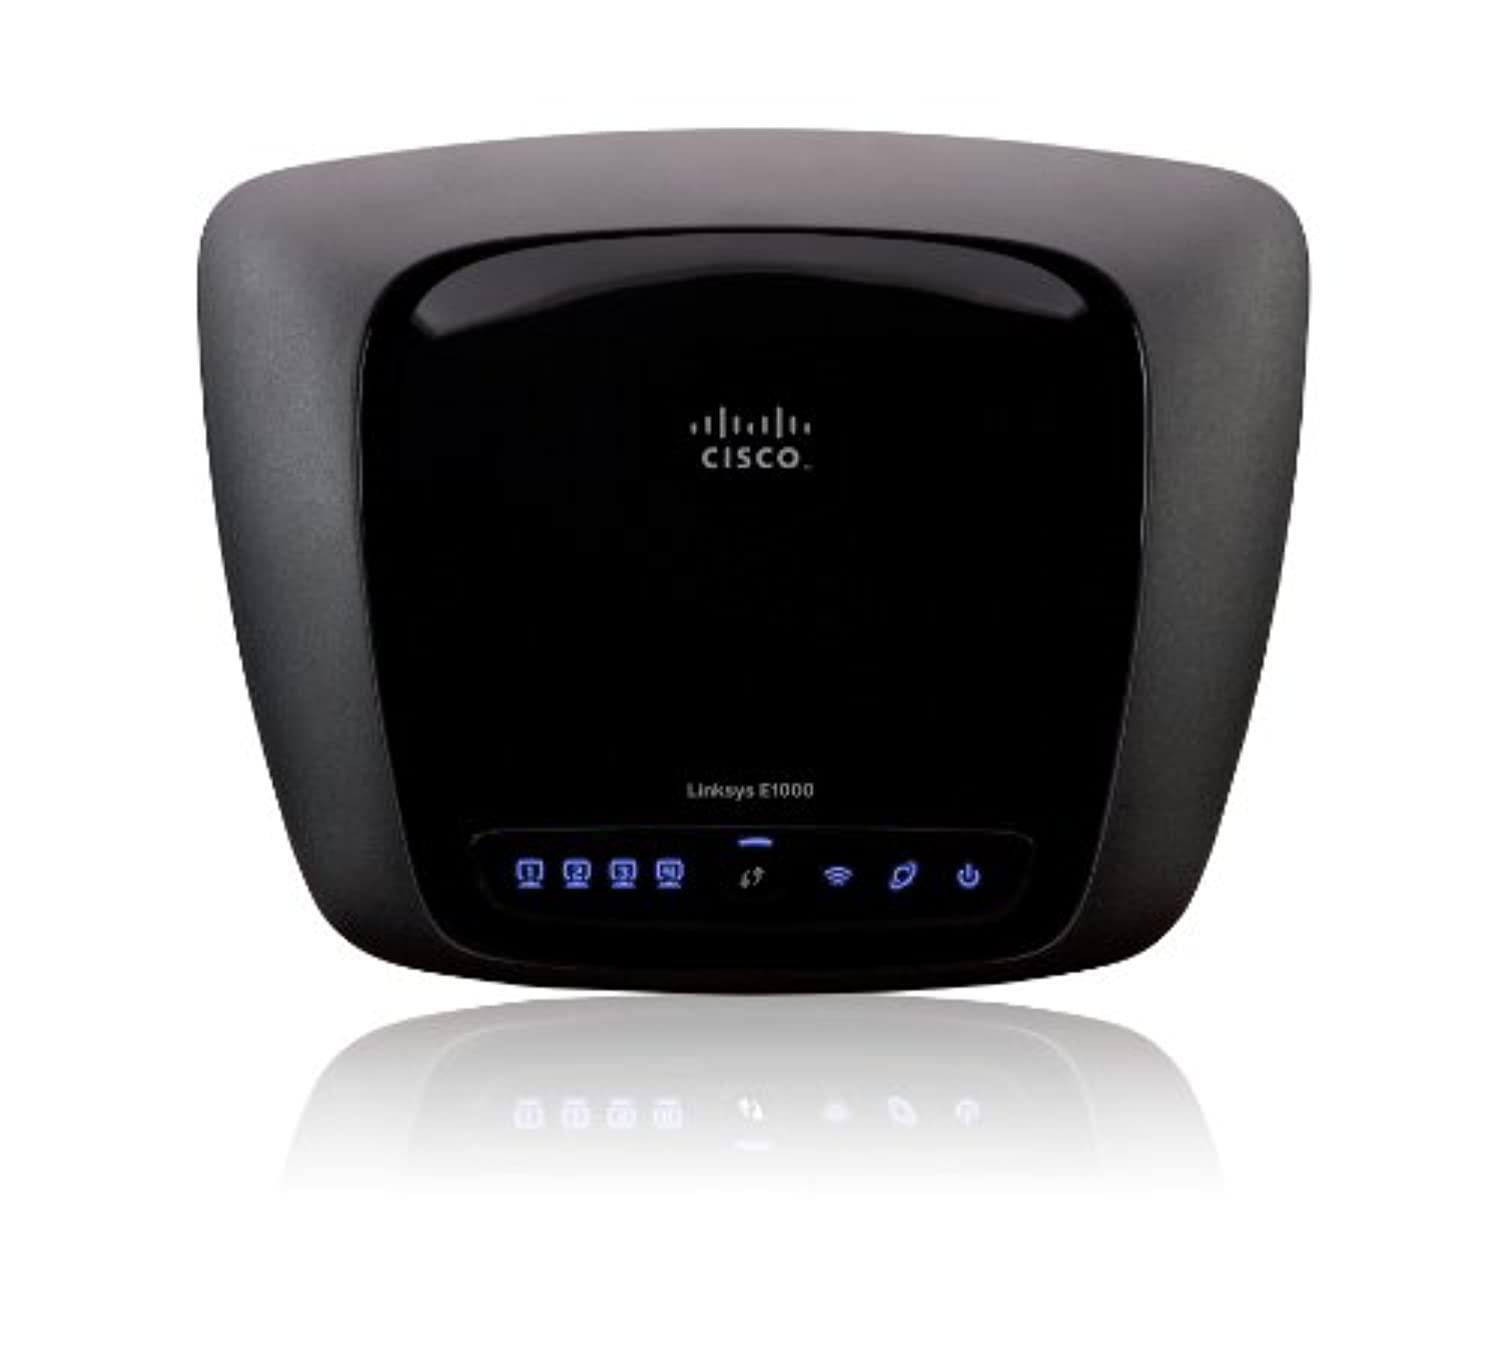 Linksys cisco-linksys e1000 wireless-n router